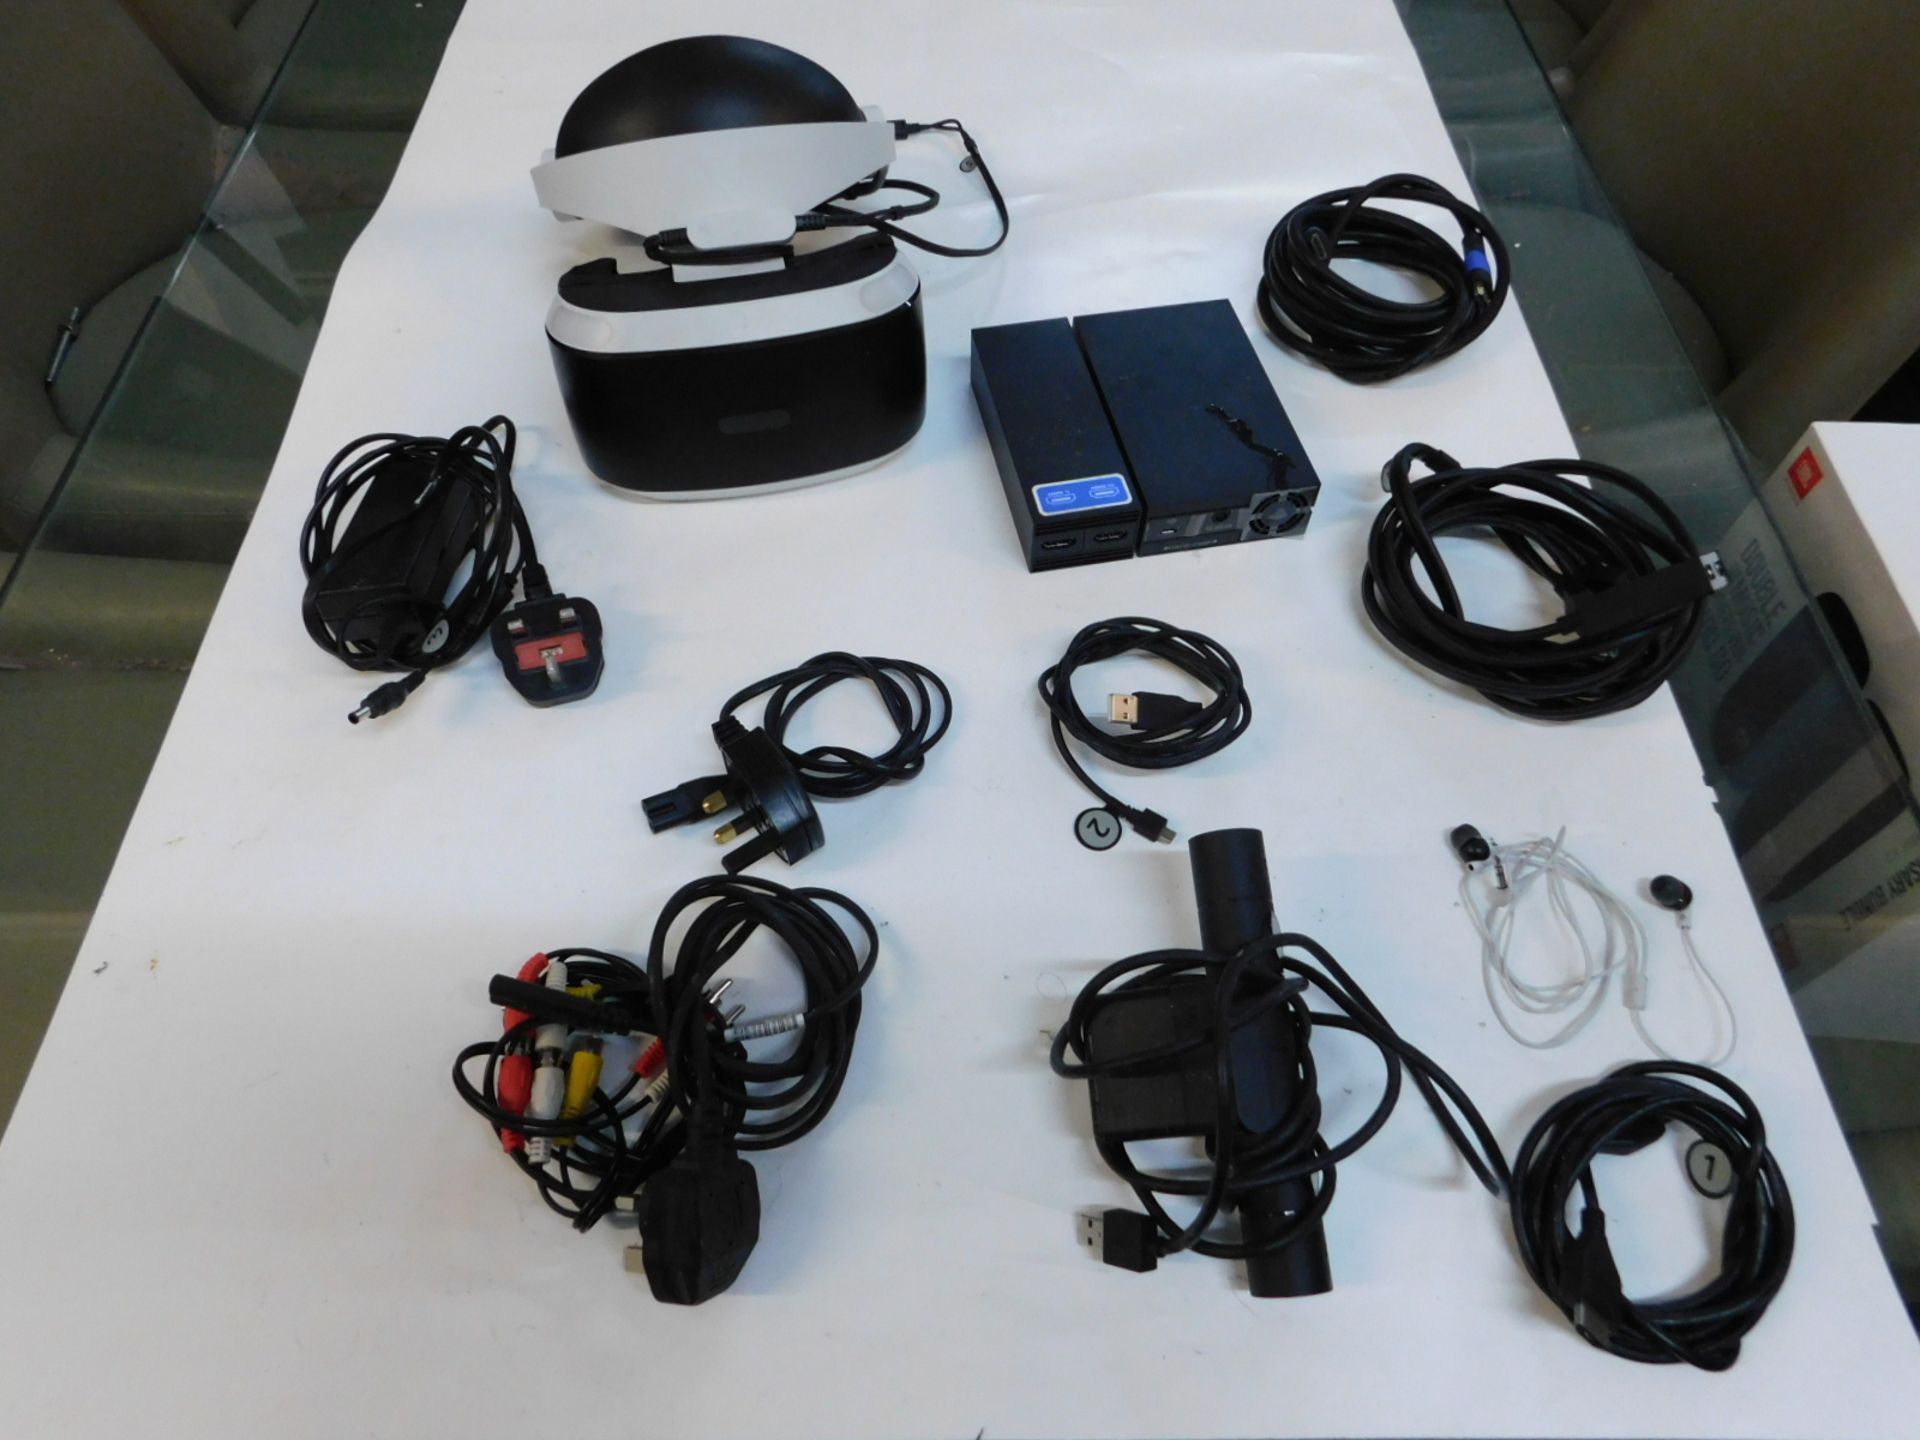 1 SONY PLAYSTATION VR PSVR CUH-ZVR2 VIRTUAL REALITY HEADSET PS4 RRP Â£149.99